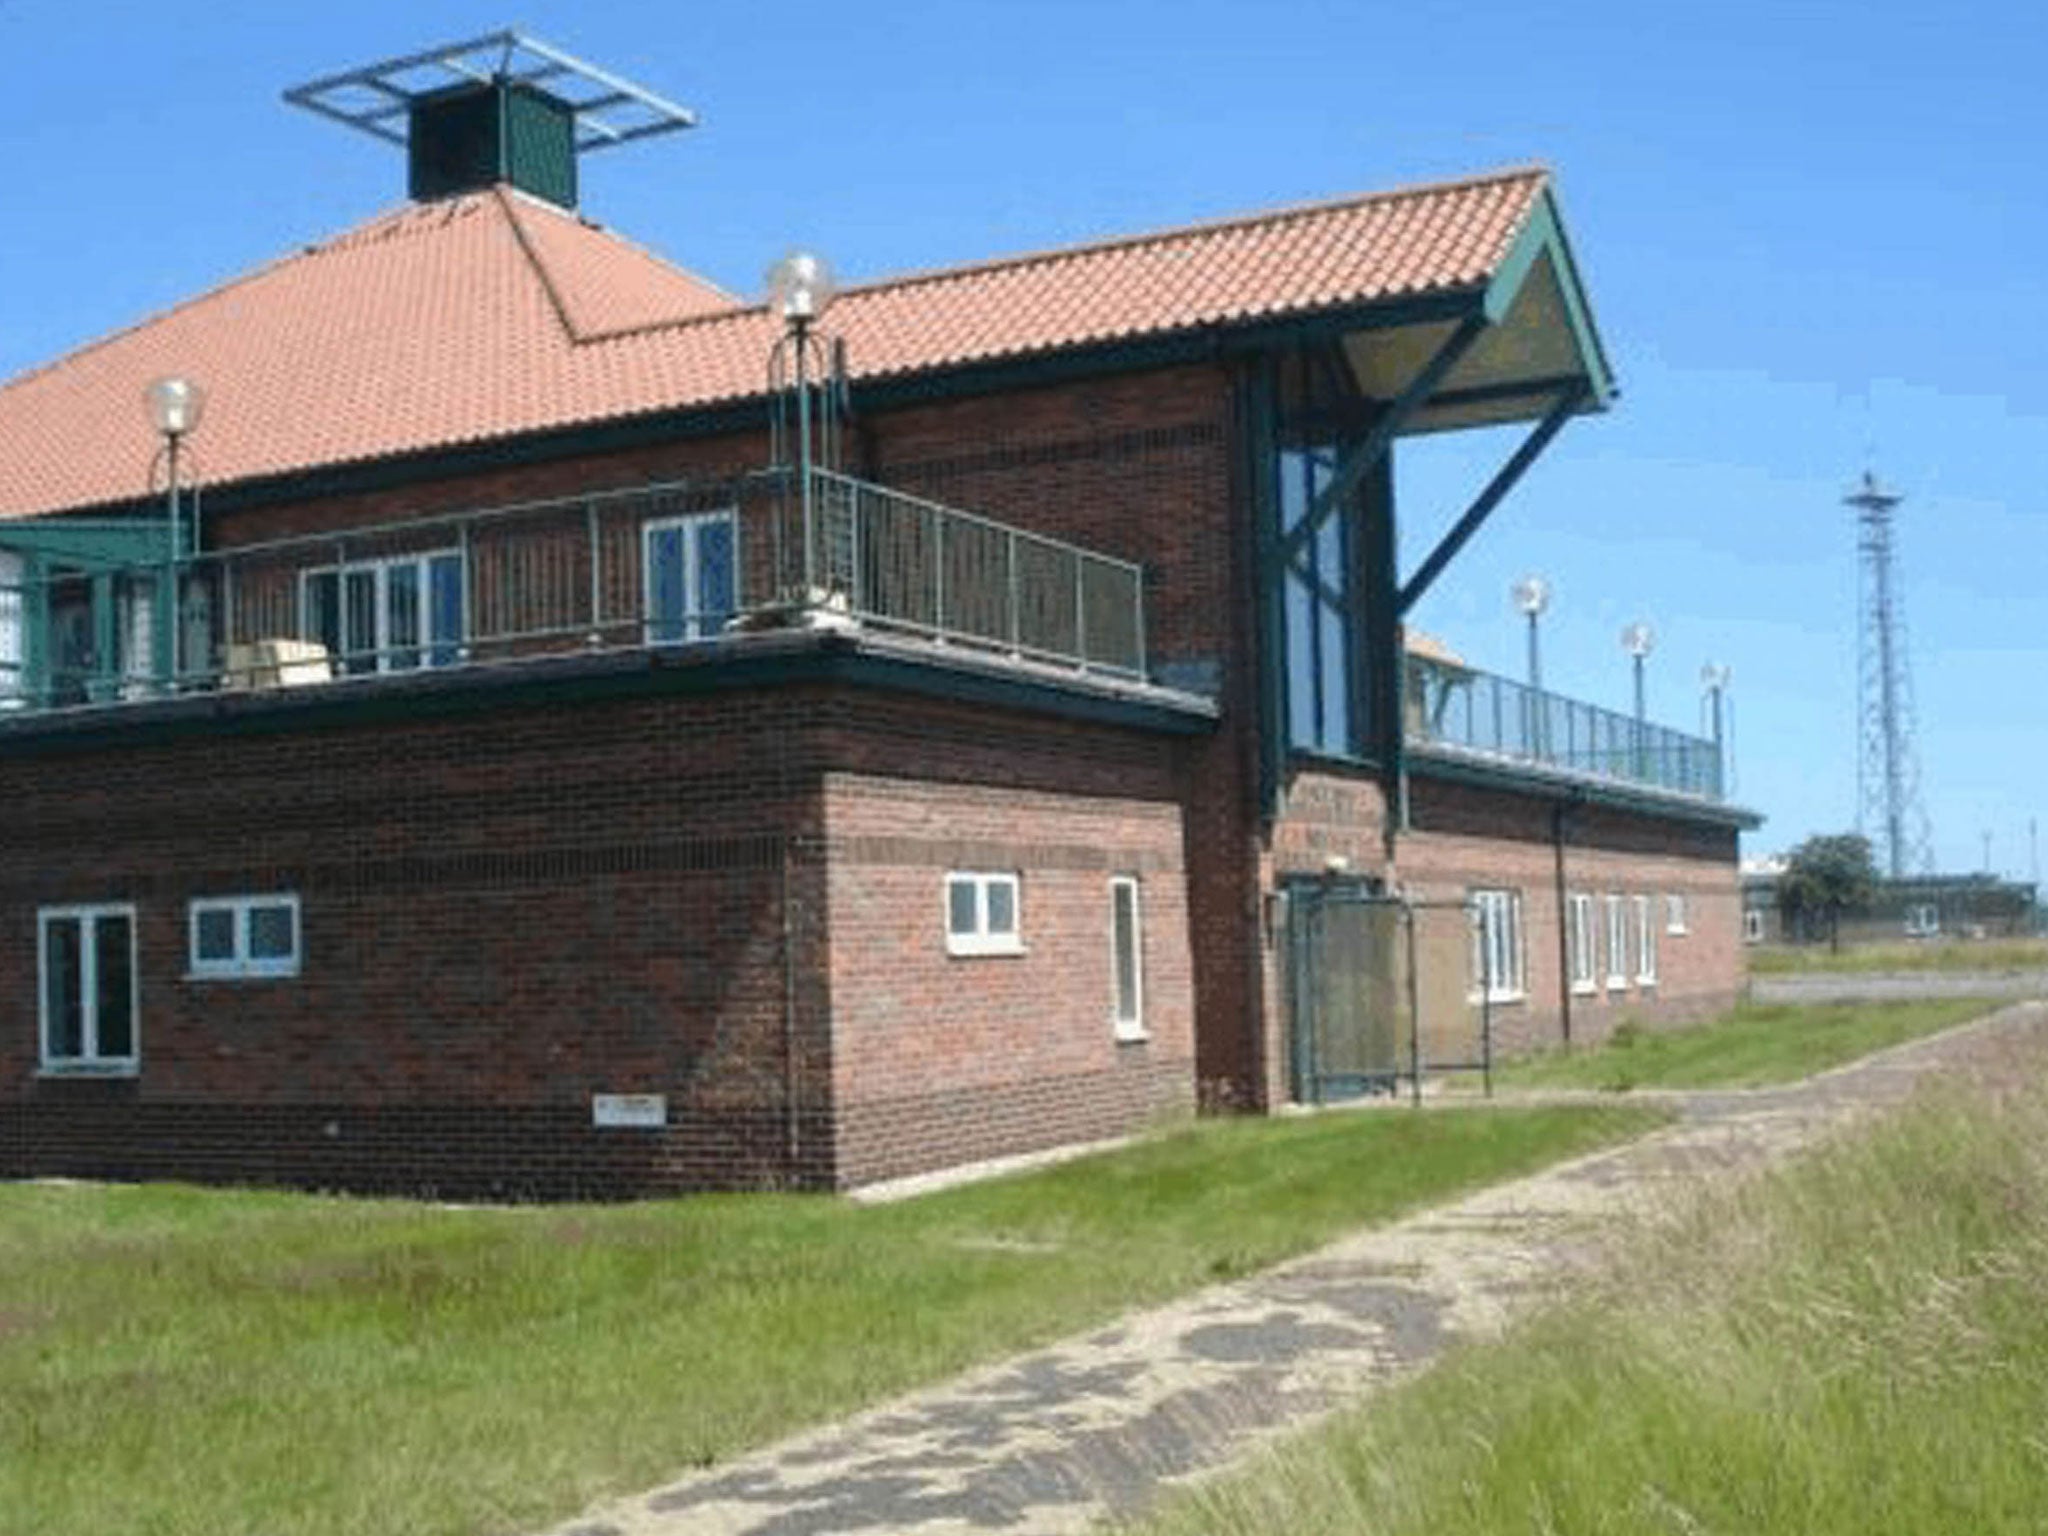 The former RAF Neatishead radar base in Norfolk